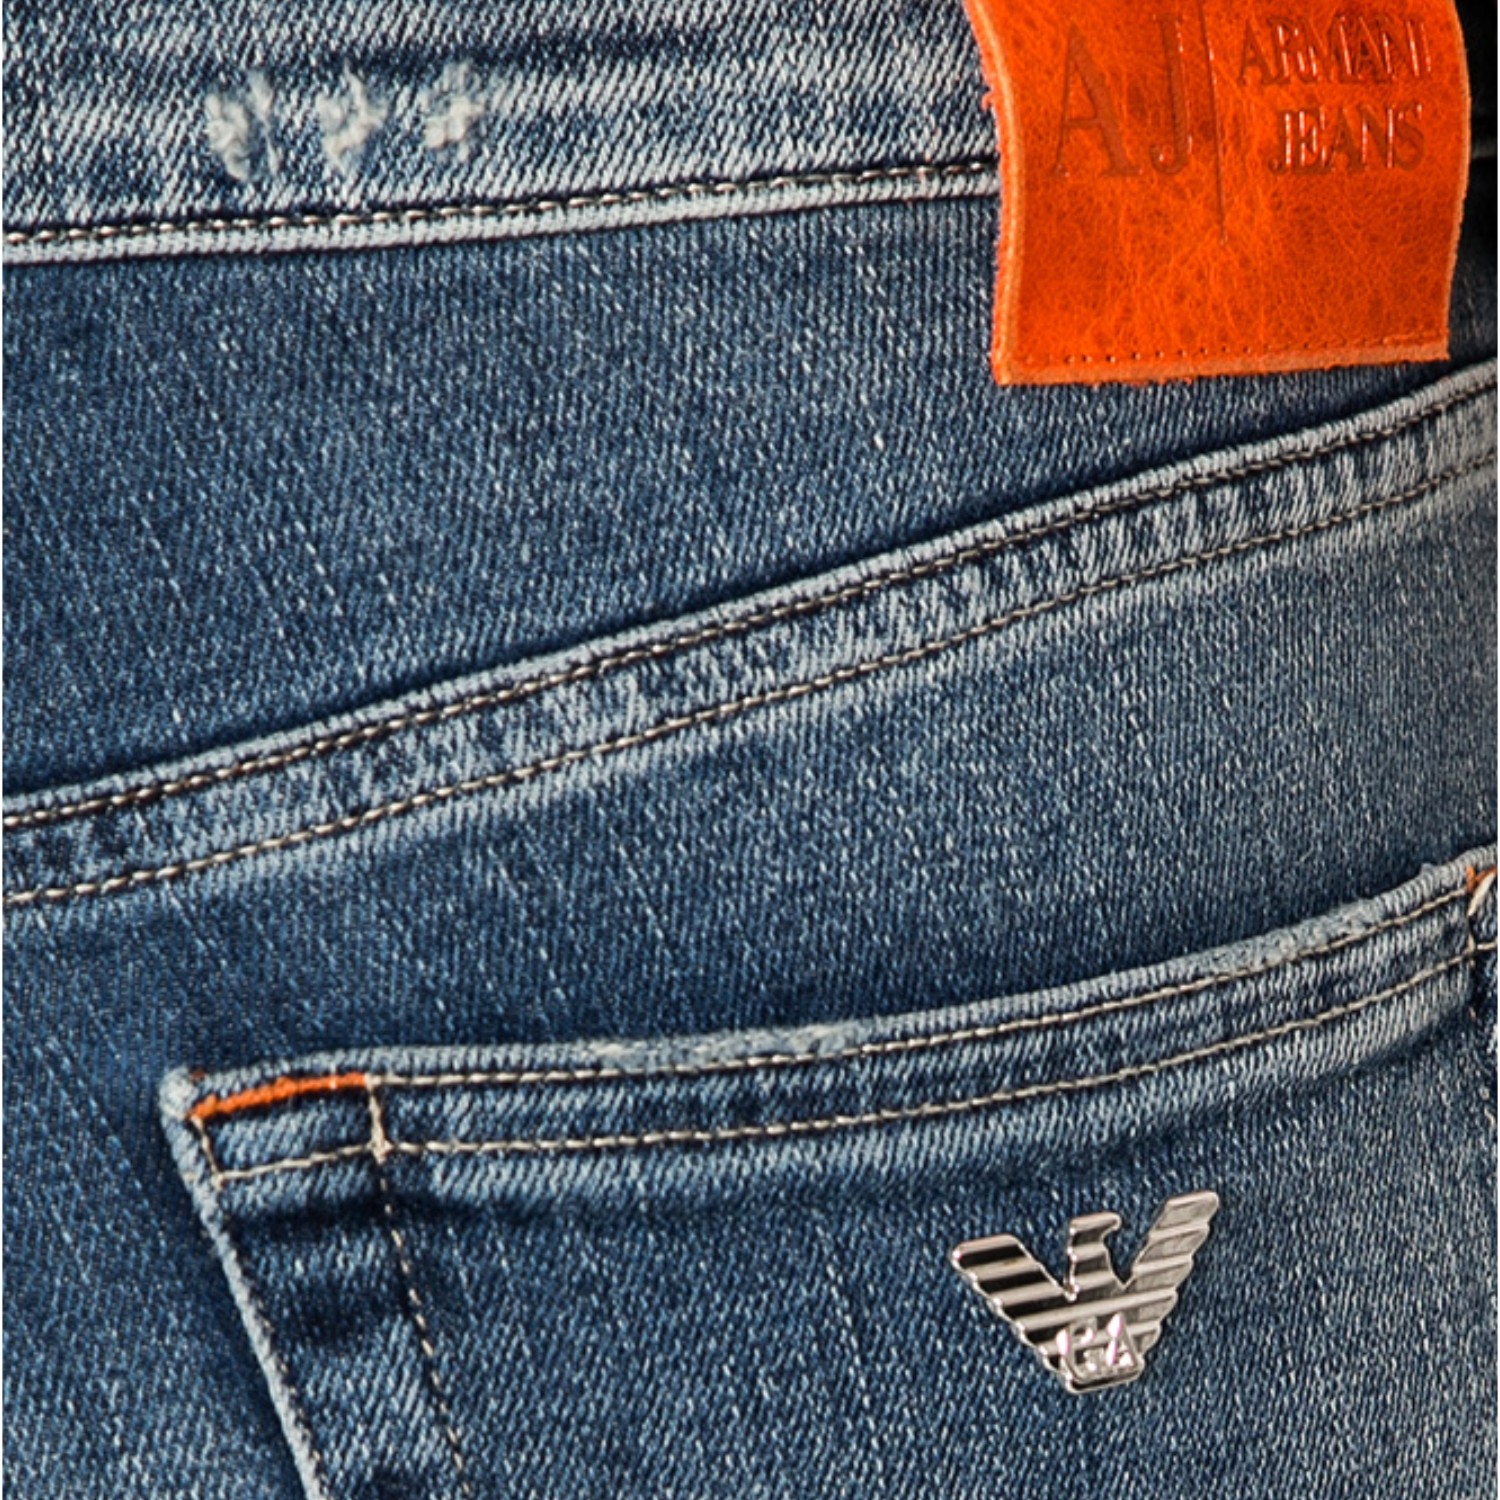 armani jeans/阿玛尼牛仔 女士蓝色破洞中腰牛仔裤 c5j15 5f 15